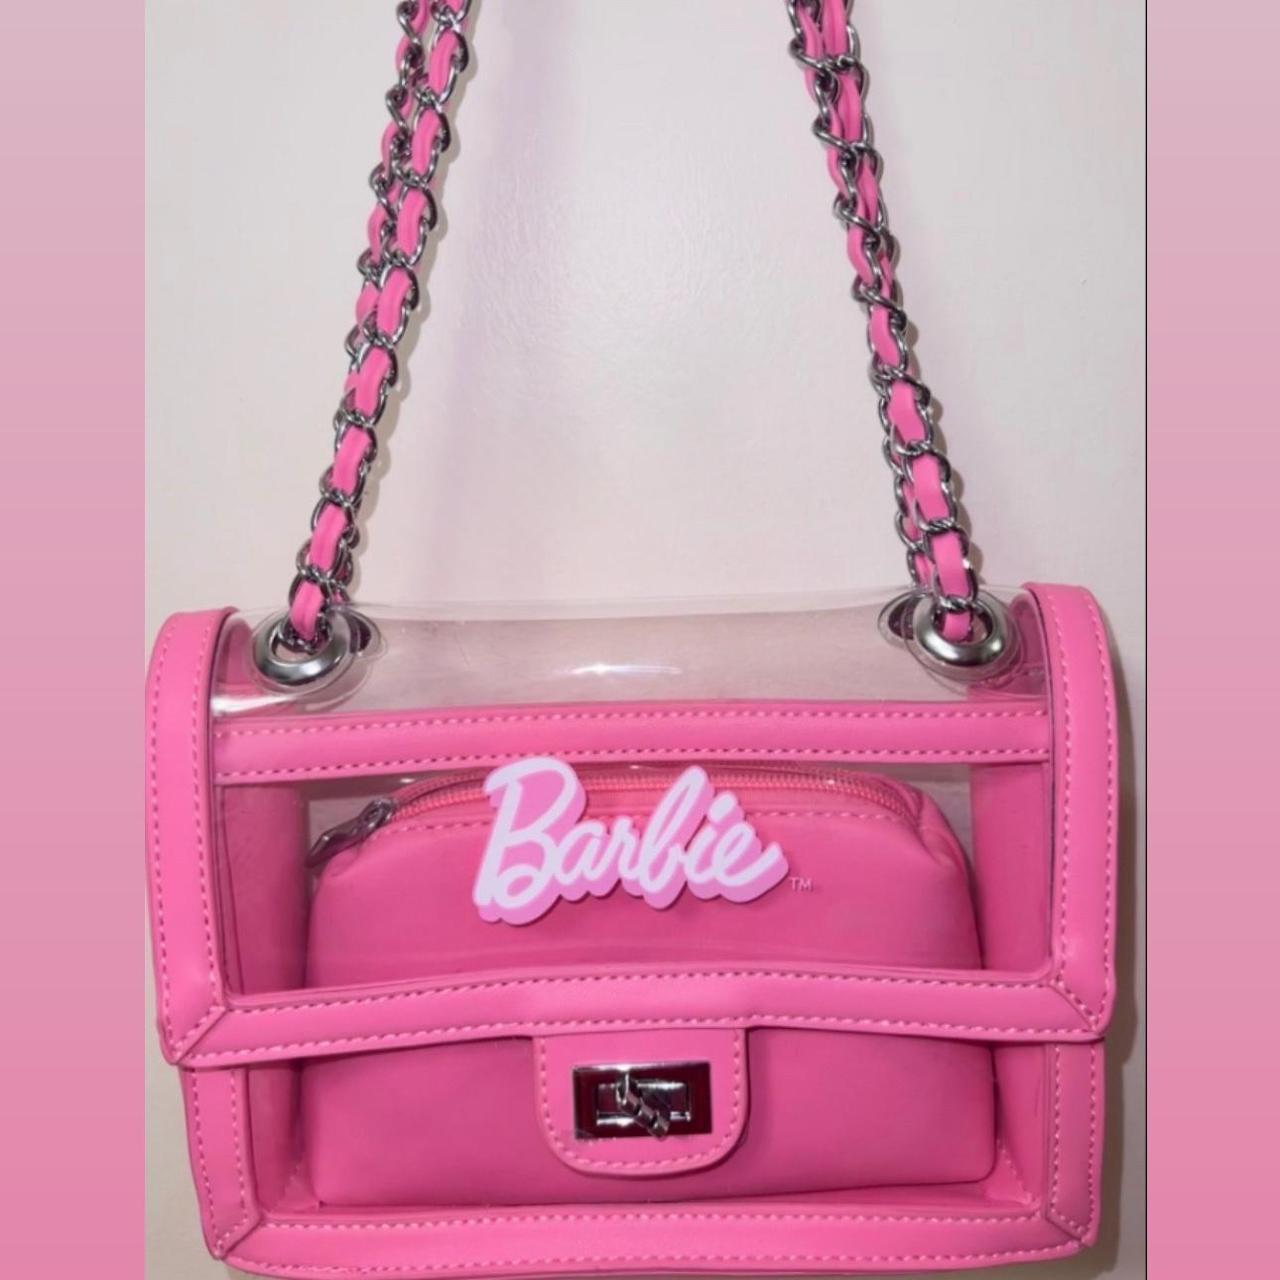 Barbie Women's Pink Bag | Depop